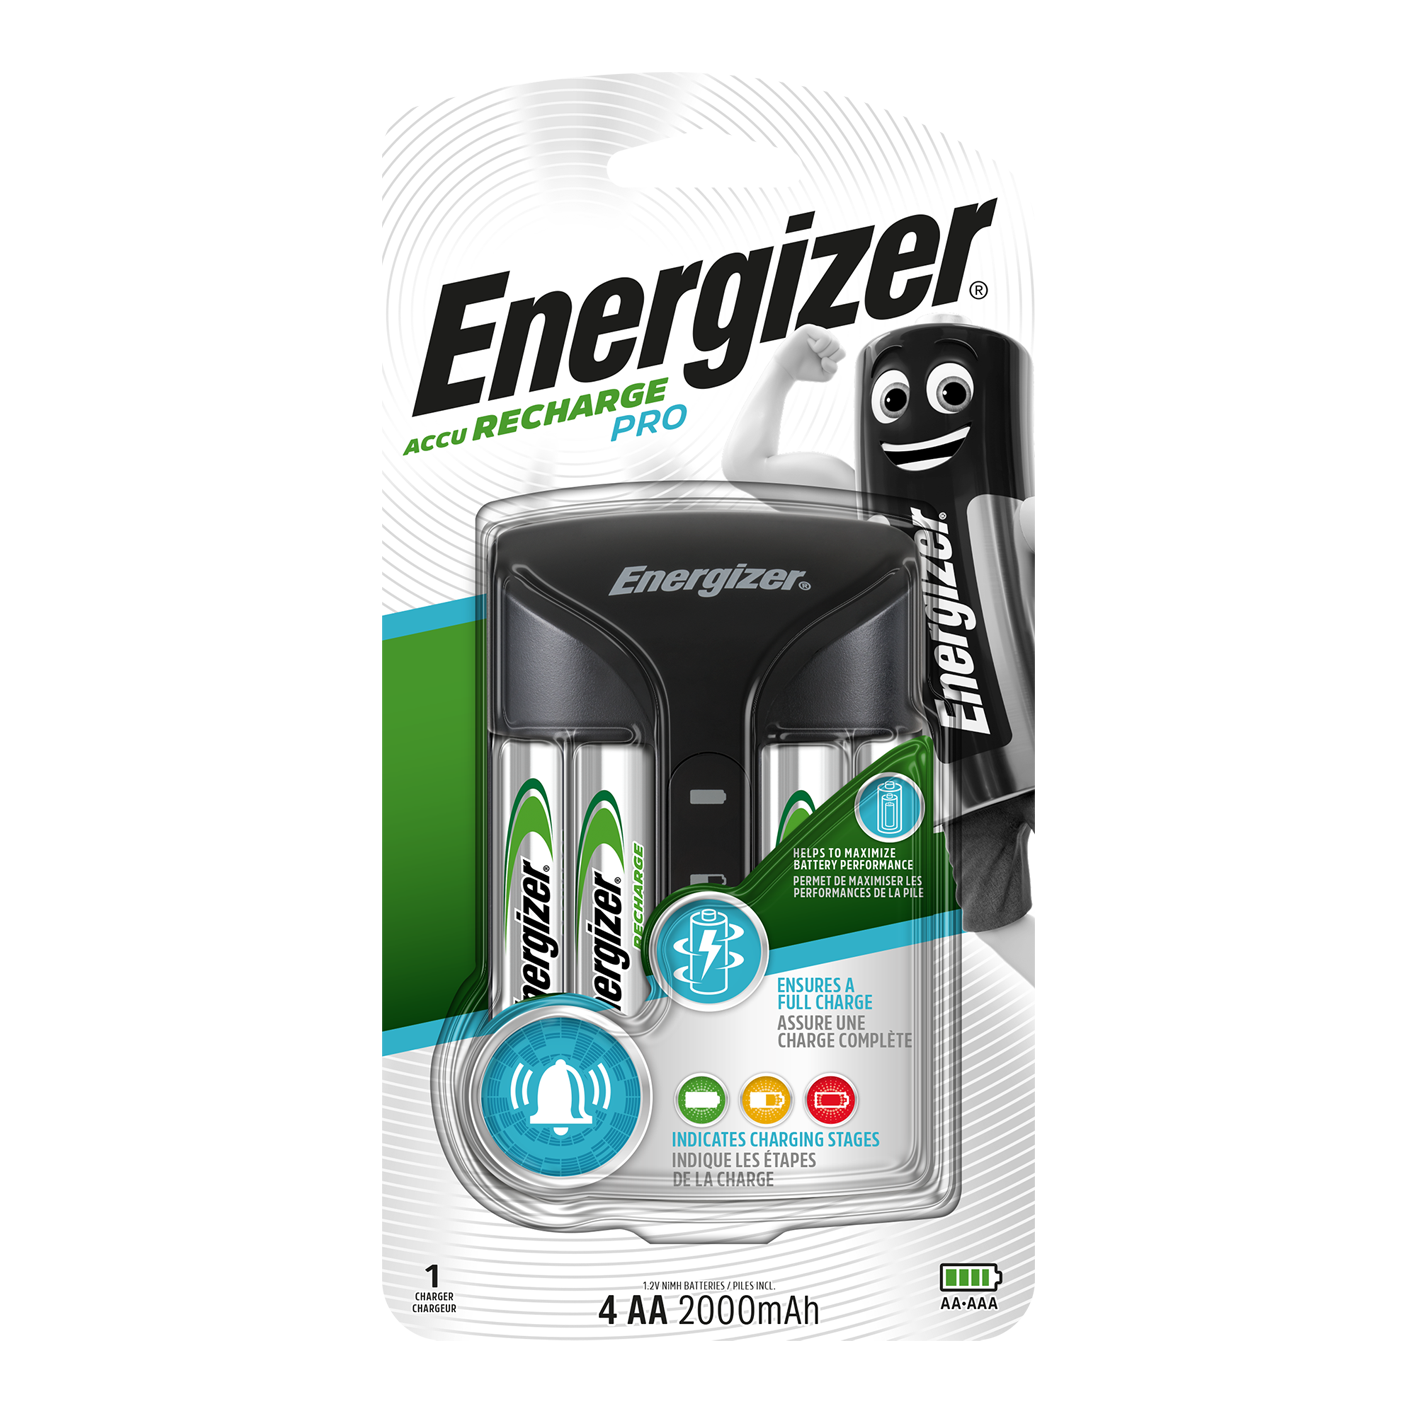 Recarga Energizer® – Provider Europe